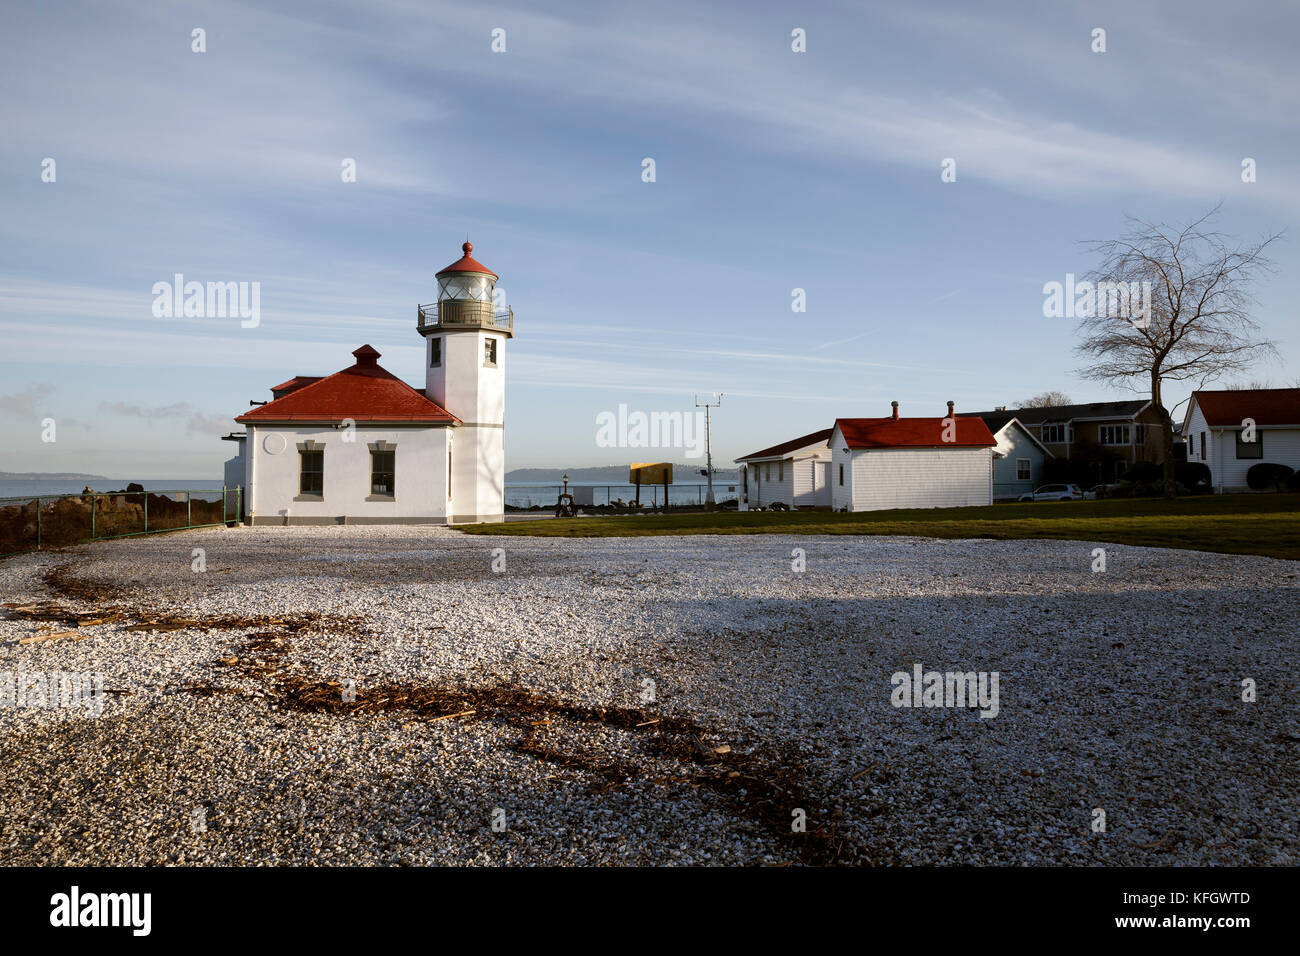 WA 14019-00 ... WASHINGTON - Alki Point Lighthouse am Puget Sound im Westen Seattle. Stockfoto